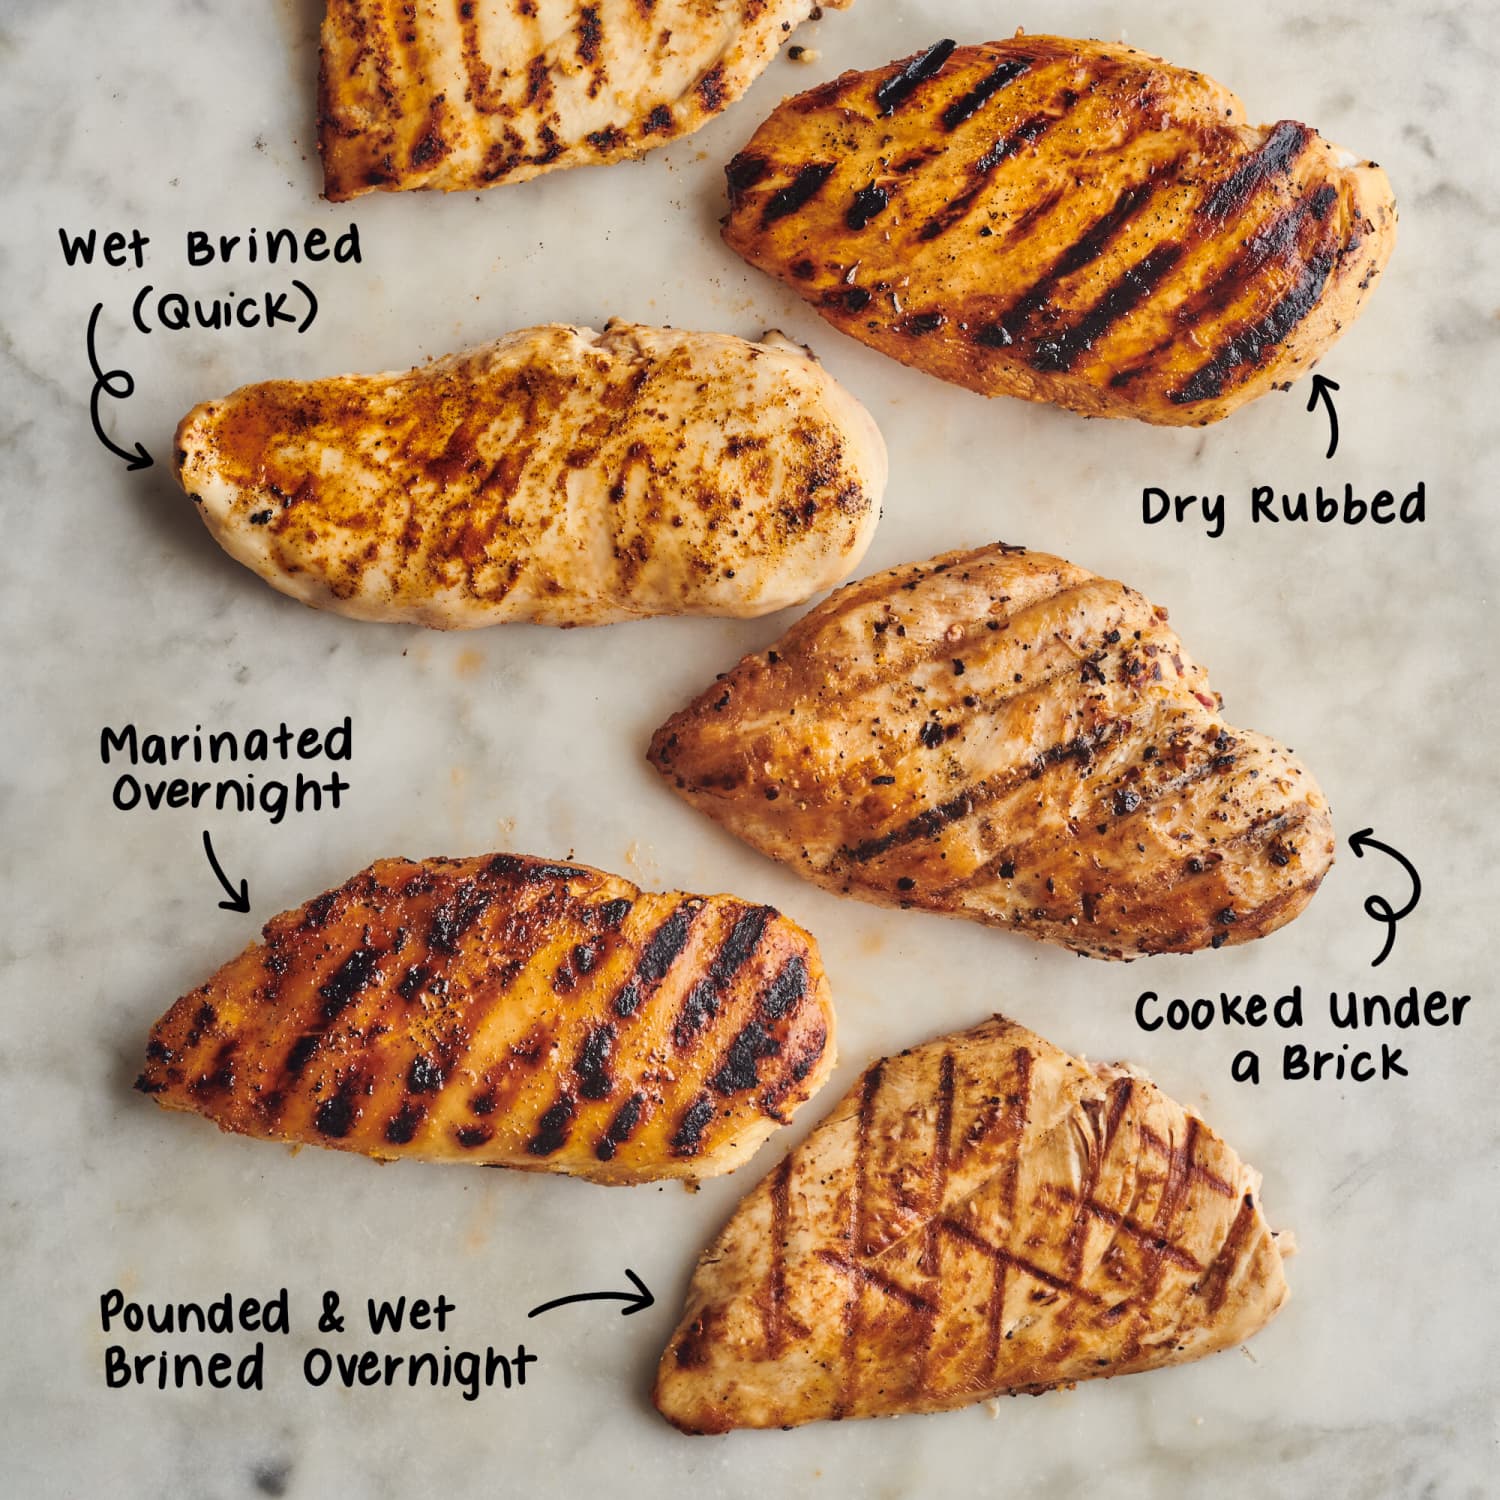 Best Grilled Chicken Breast Recipe - How to Grill Chicken Breast